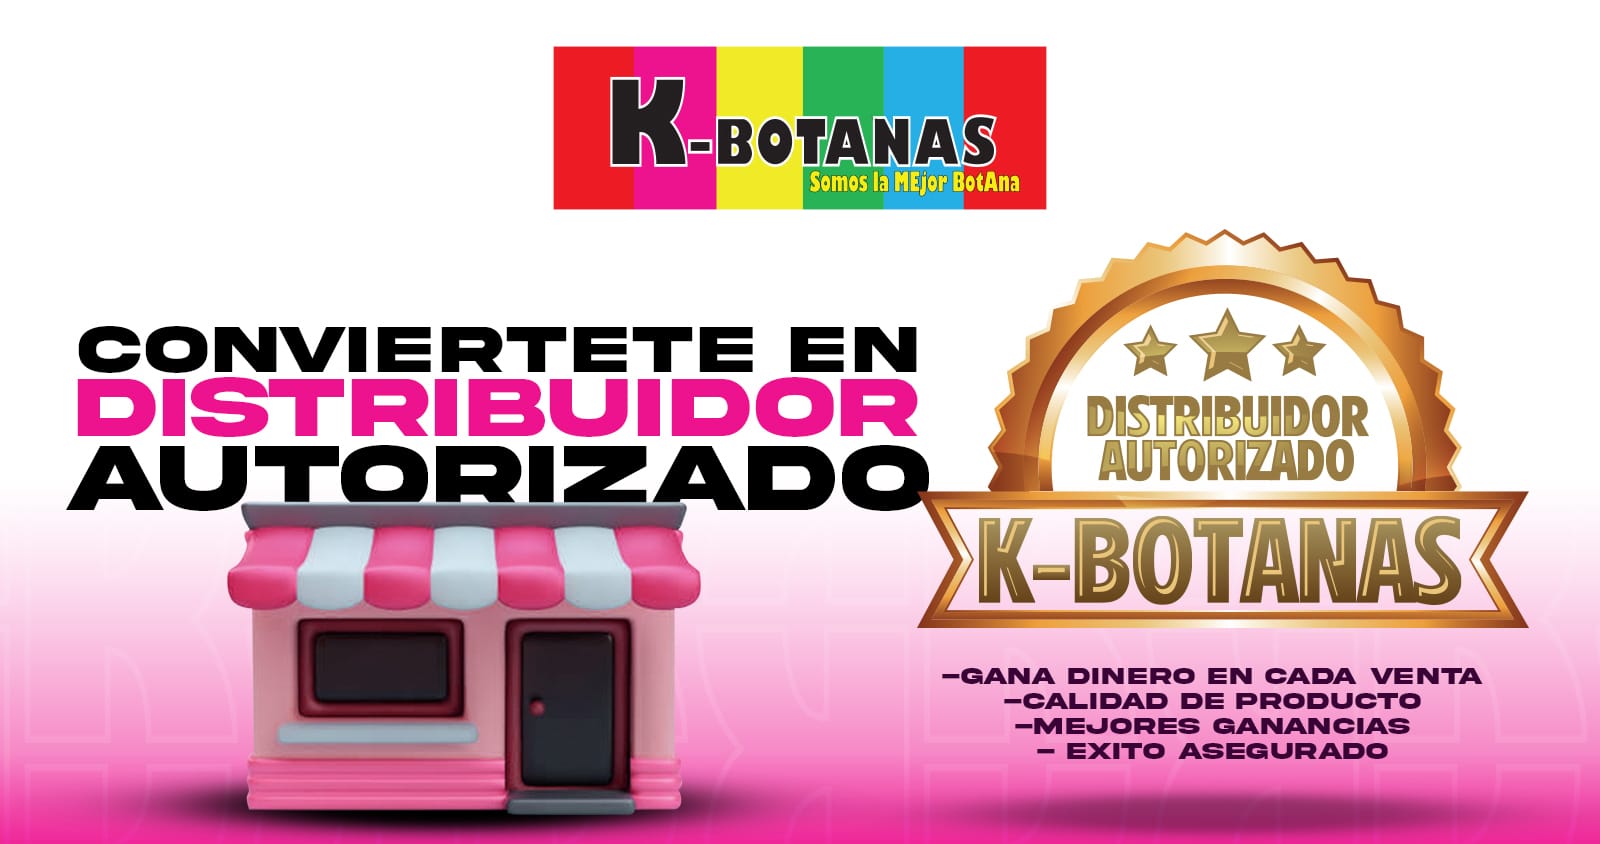 K-BOTANAS_DISTRIBUIDORES